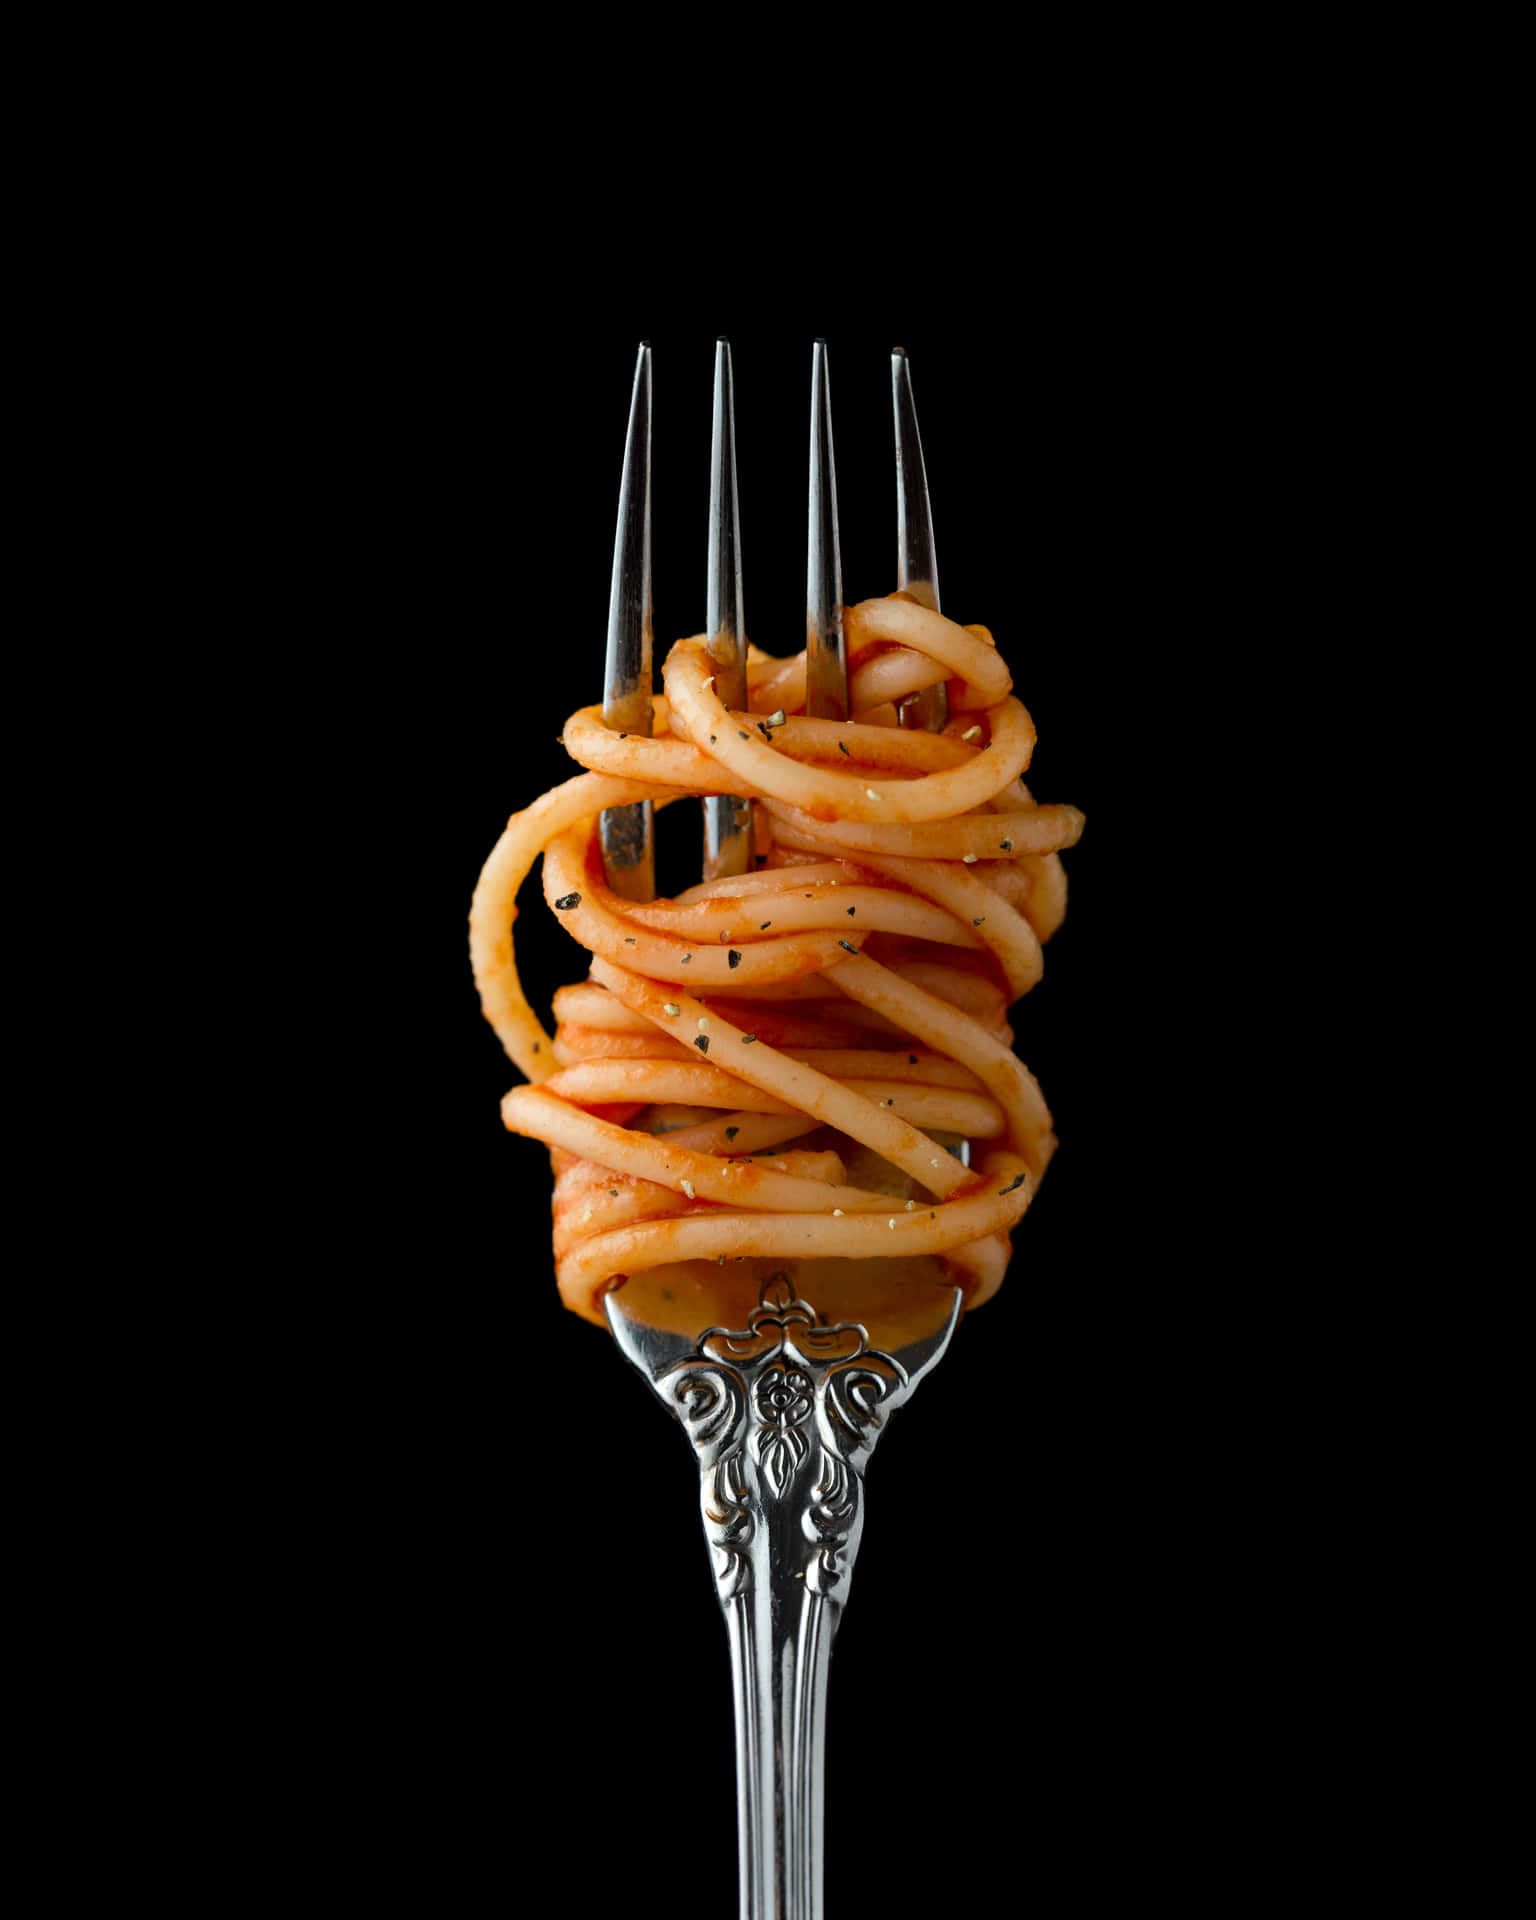  Nudeln Hintergrundbild 1536x1920. Free Spaghetti Wallpaper Downloads, Spaghetti Wallpaper for FREE